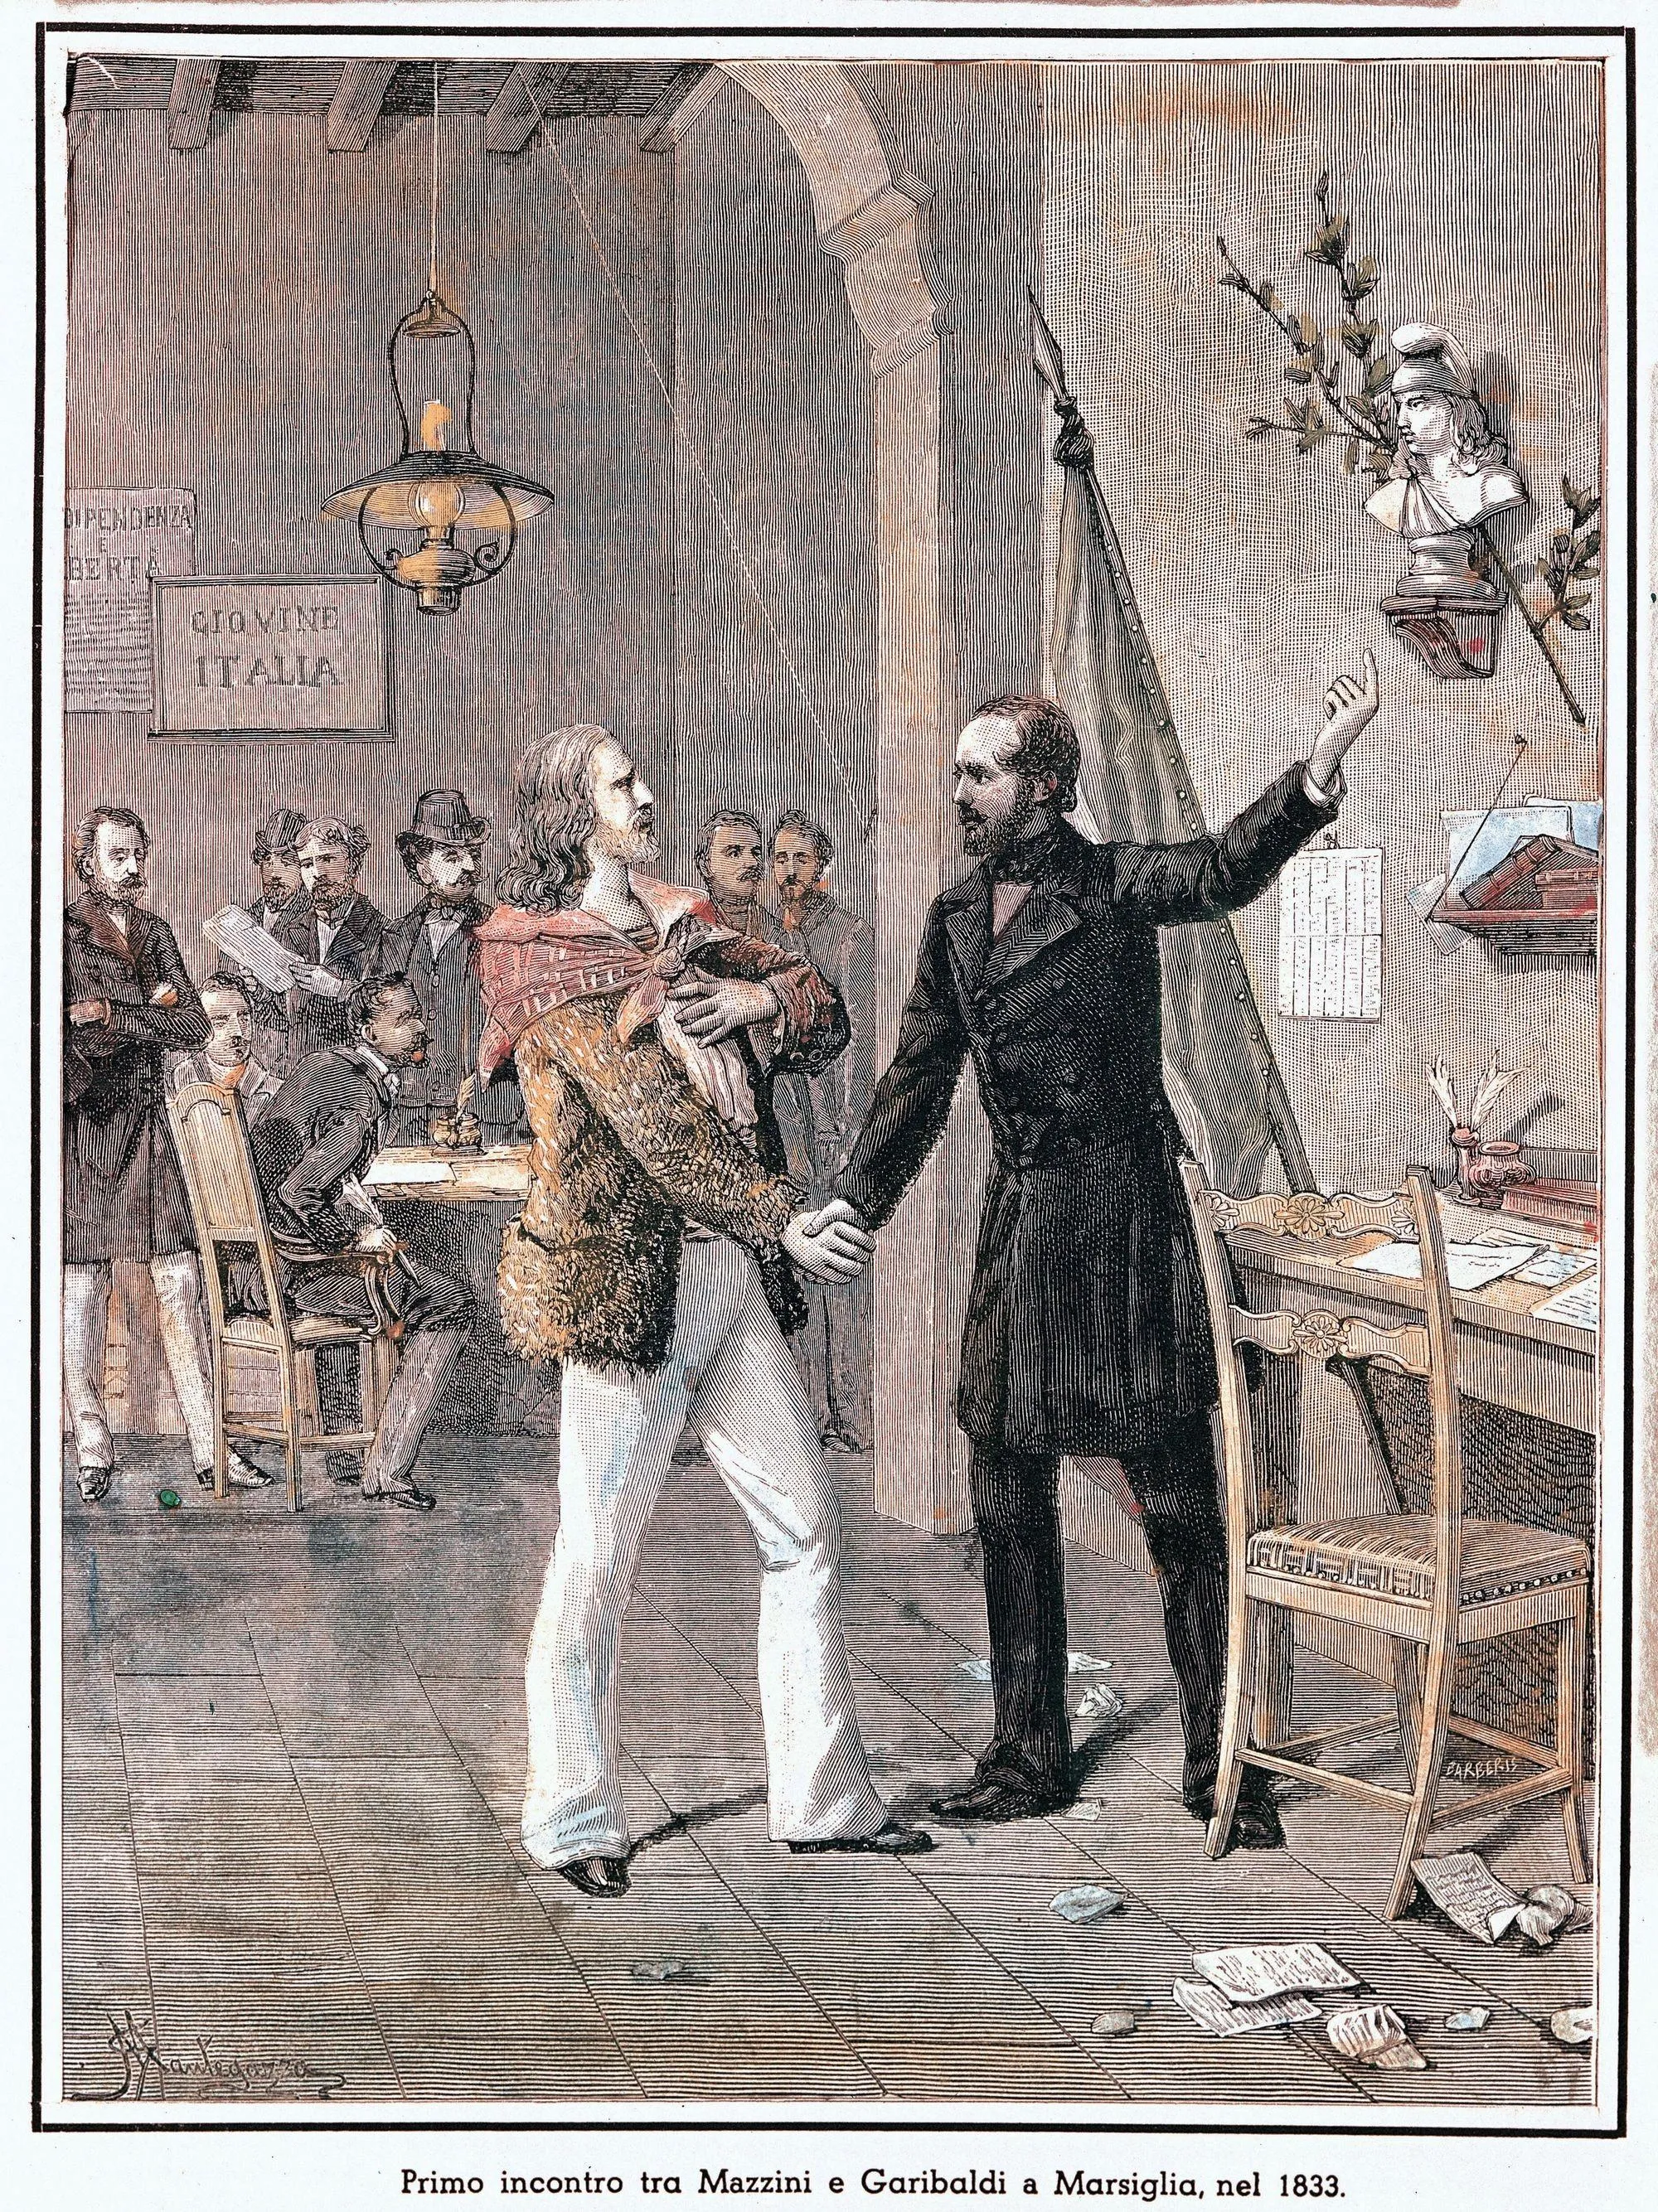 Anonyme, Première rencontre entre Giuseppe Garibaldi et Giuseppe Mazzini, v. 1833, gravure.